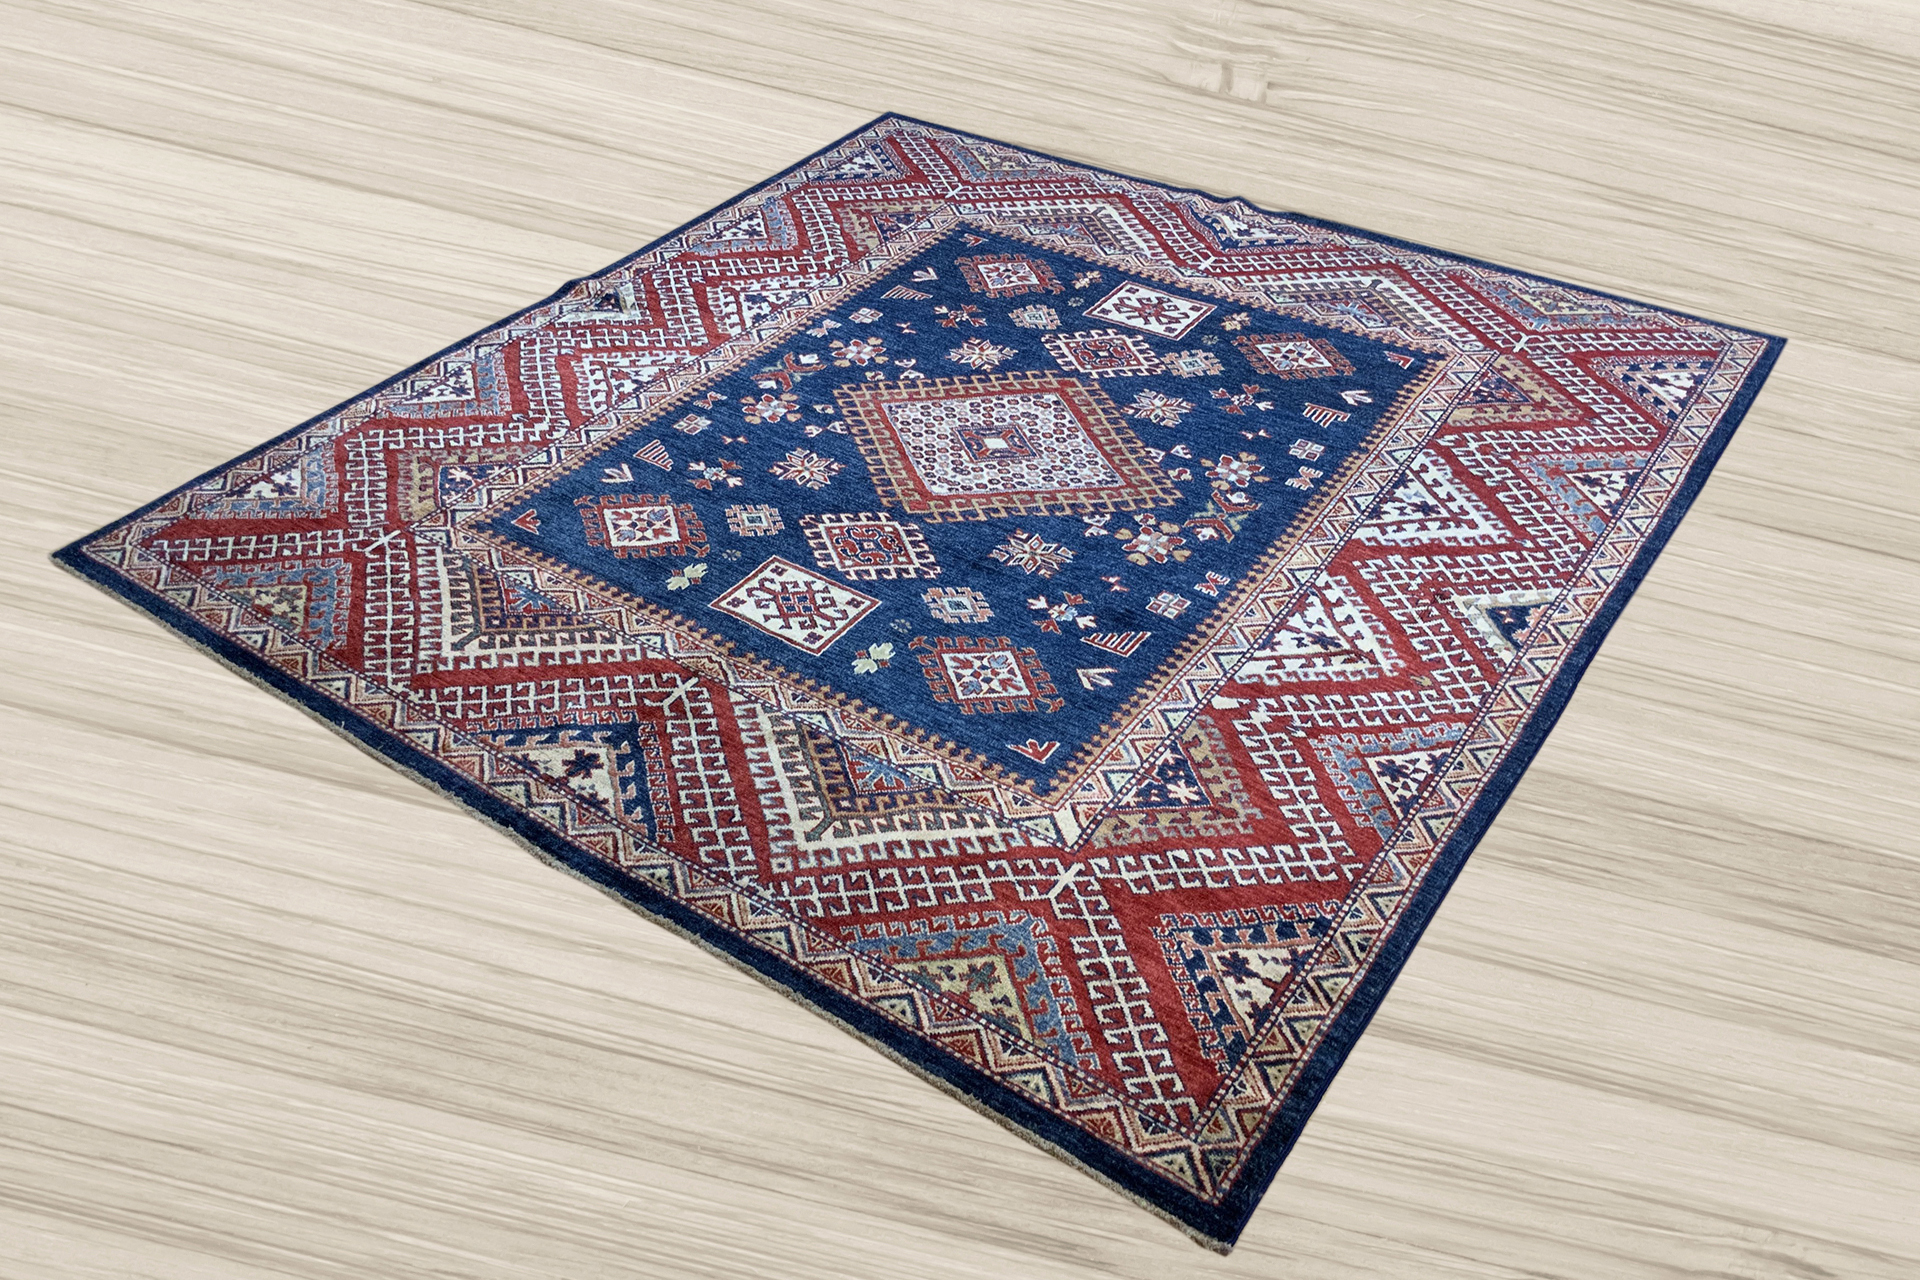 David Tiftickjian & Sons sells stunning new, used, and vintage oriental rugs.